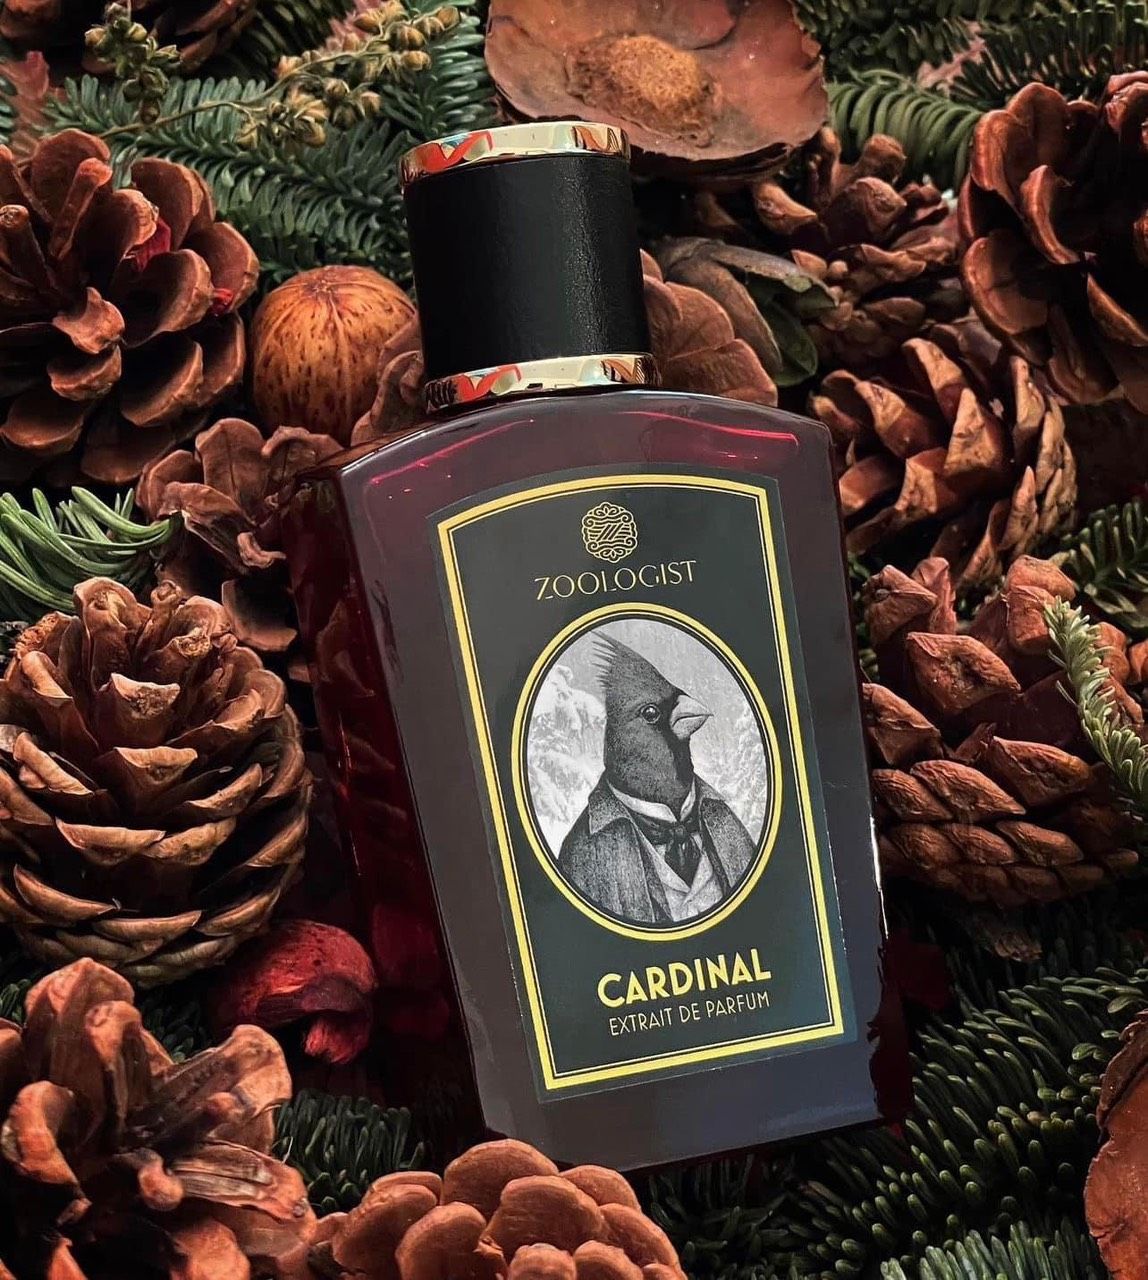  Nước Hoa Zoologist Perfumes Cardinal Limited Edition 